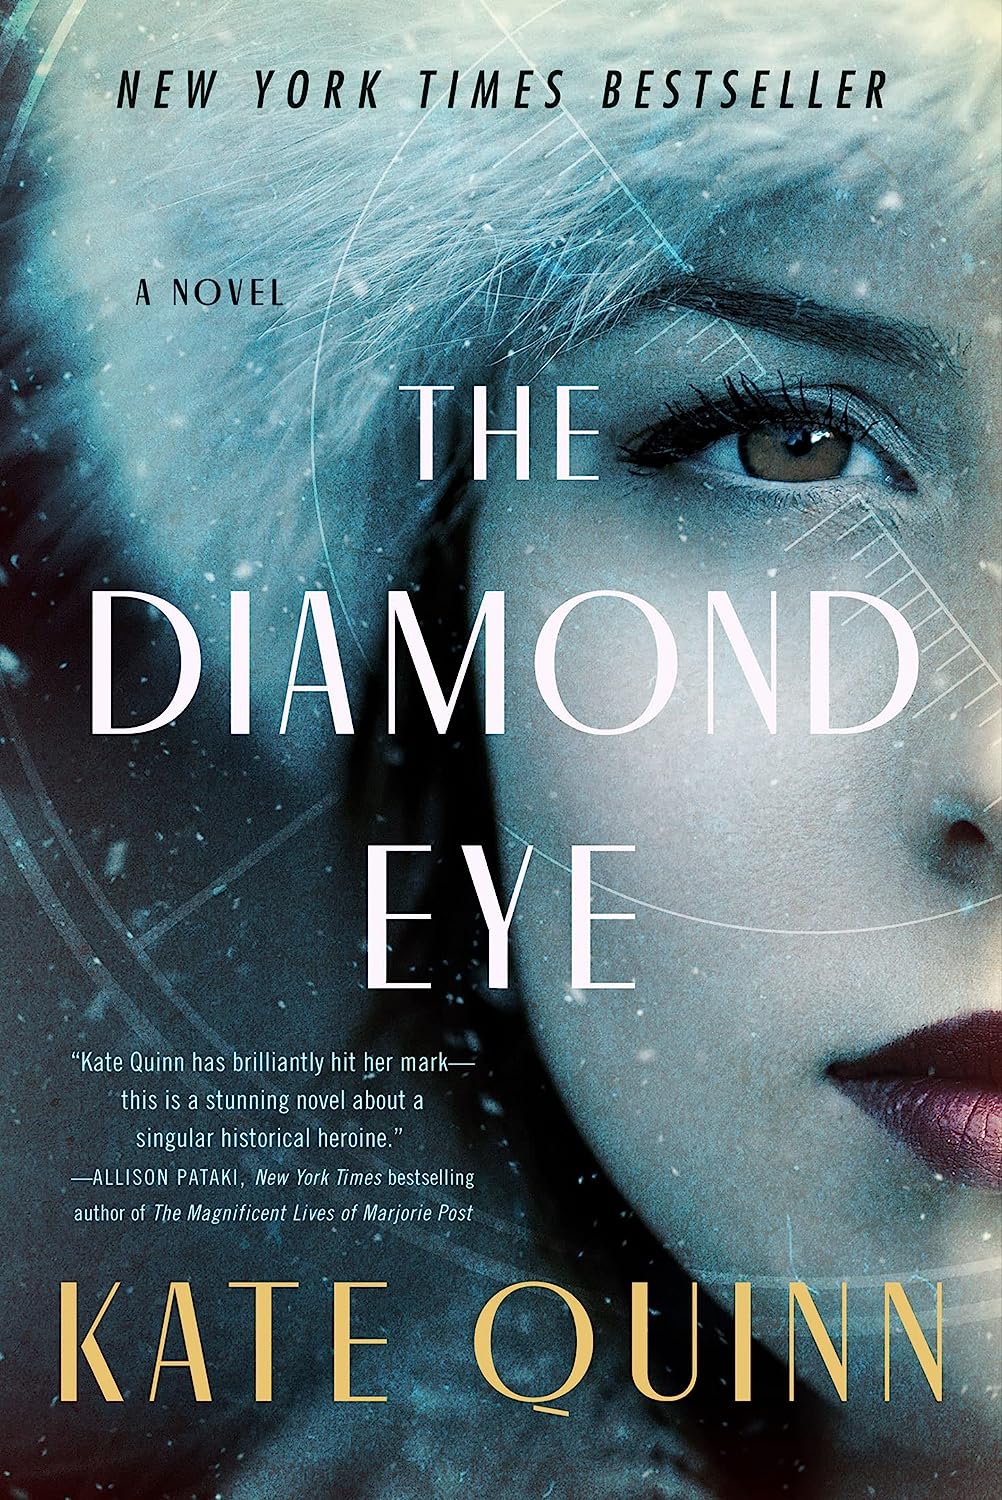 A Diamond in the Rough: Exploring 'The Diamond Eye' by Kate Quinn